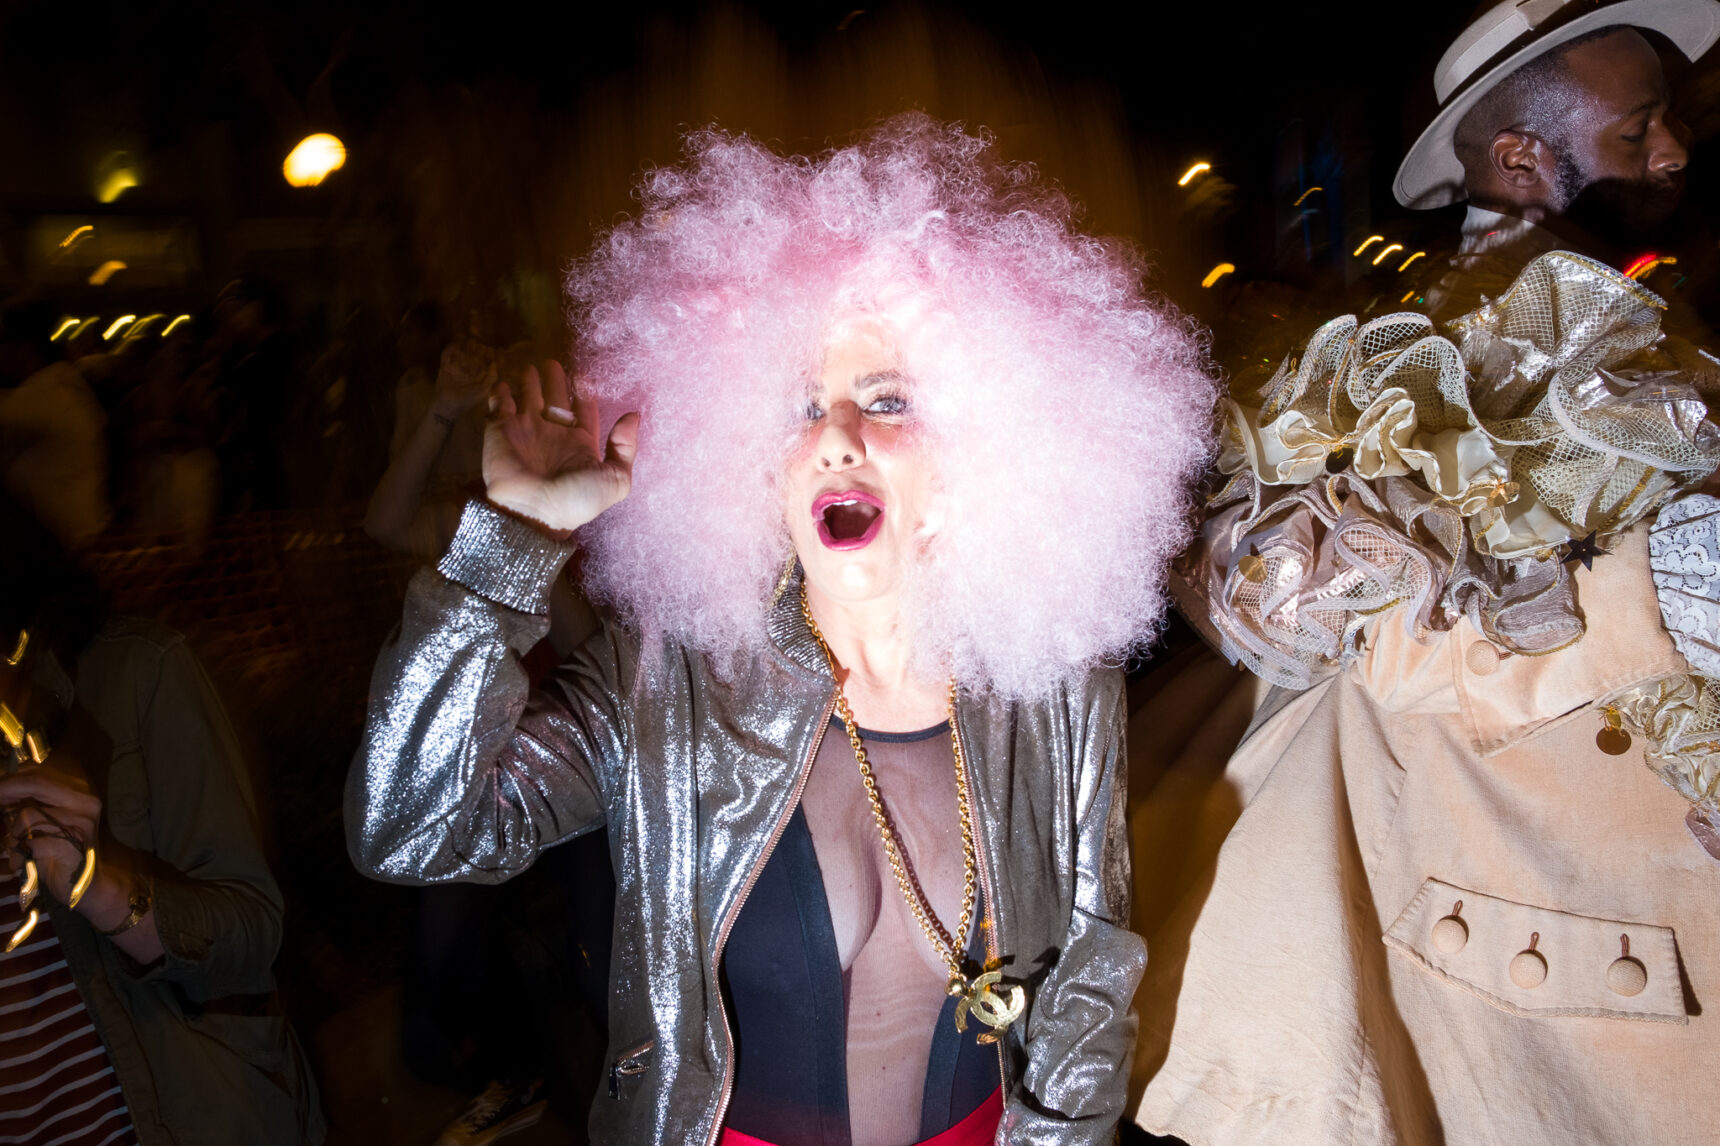 Halloween Street Photography - Pink Hair Lady